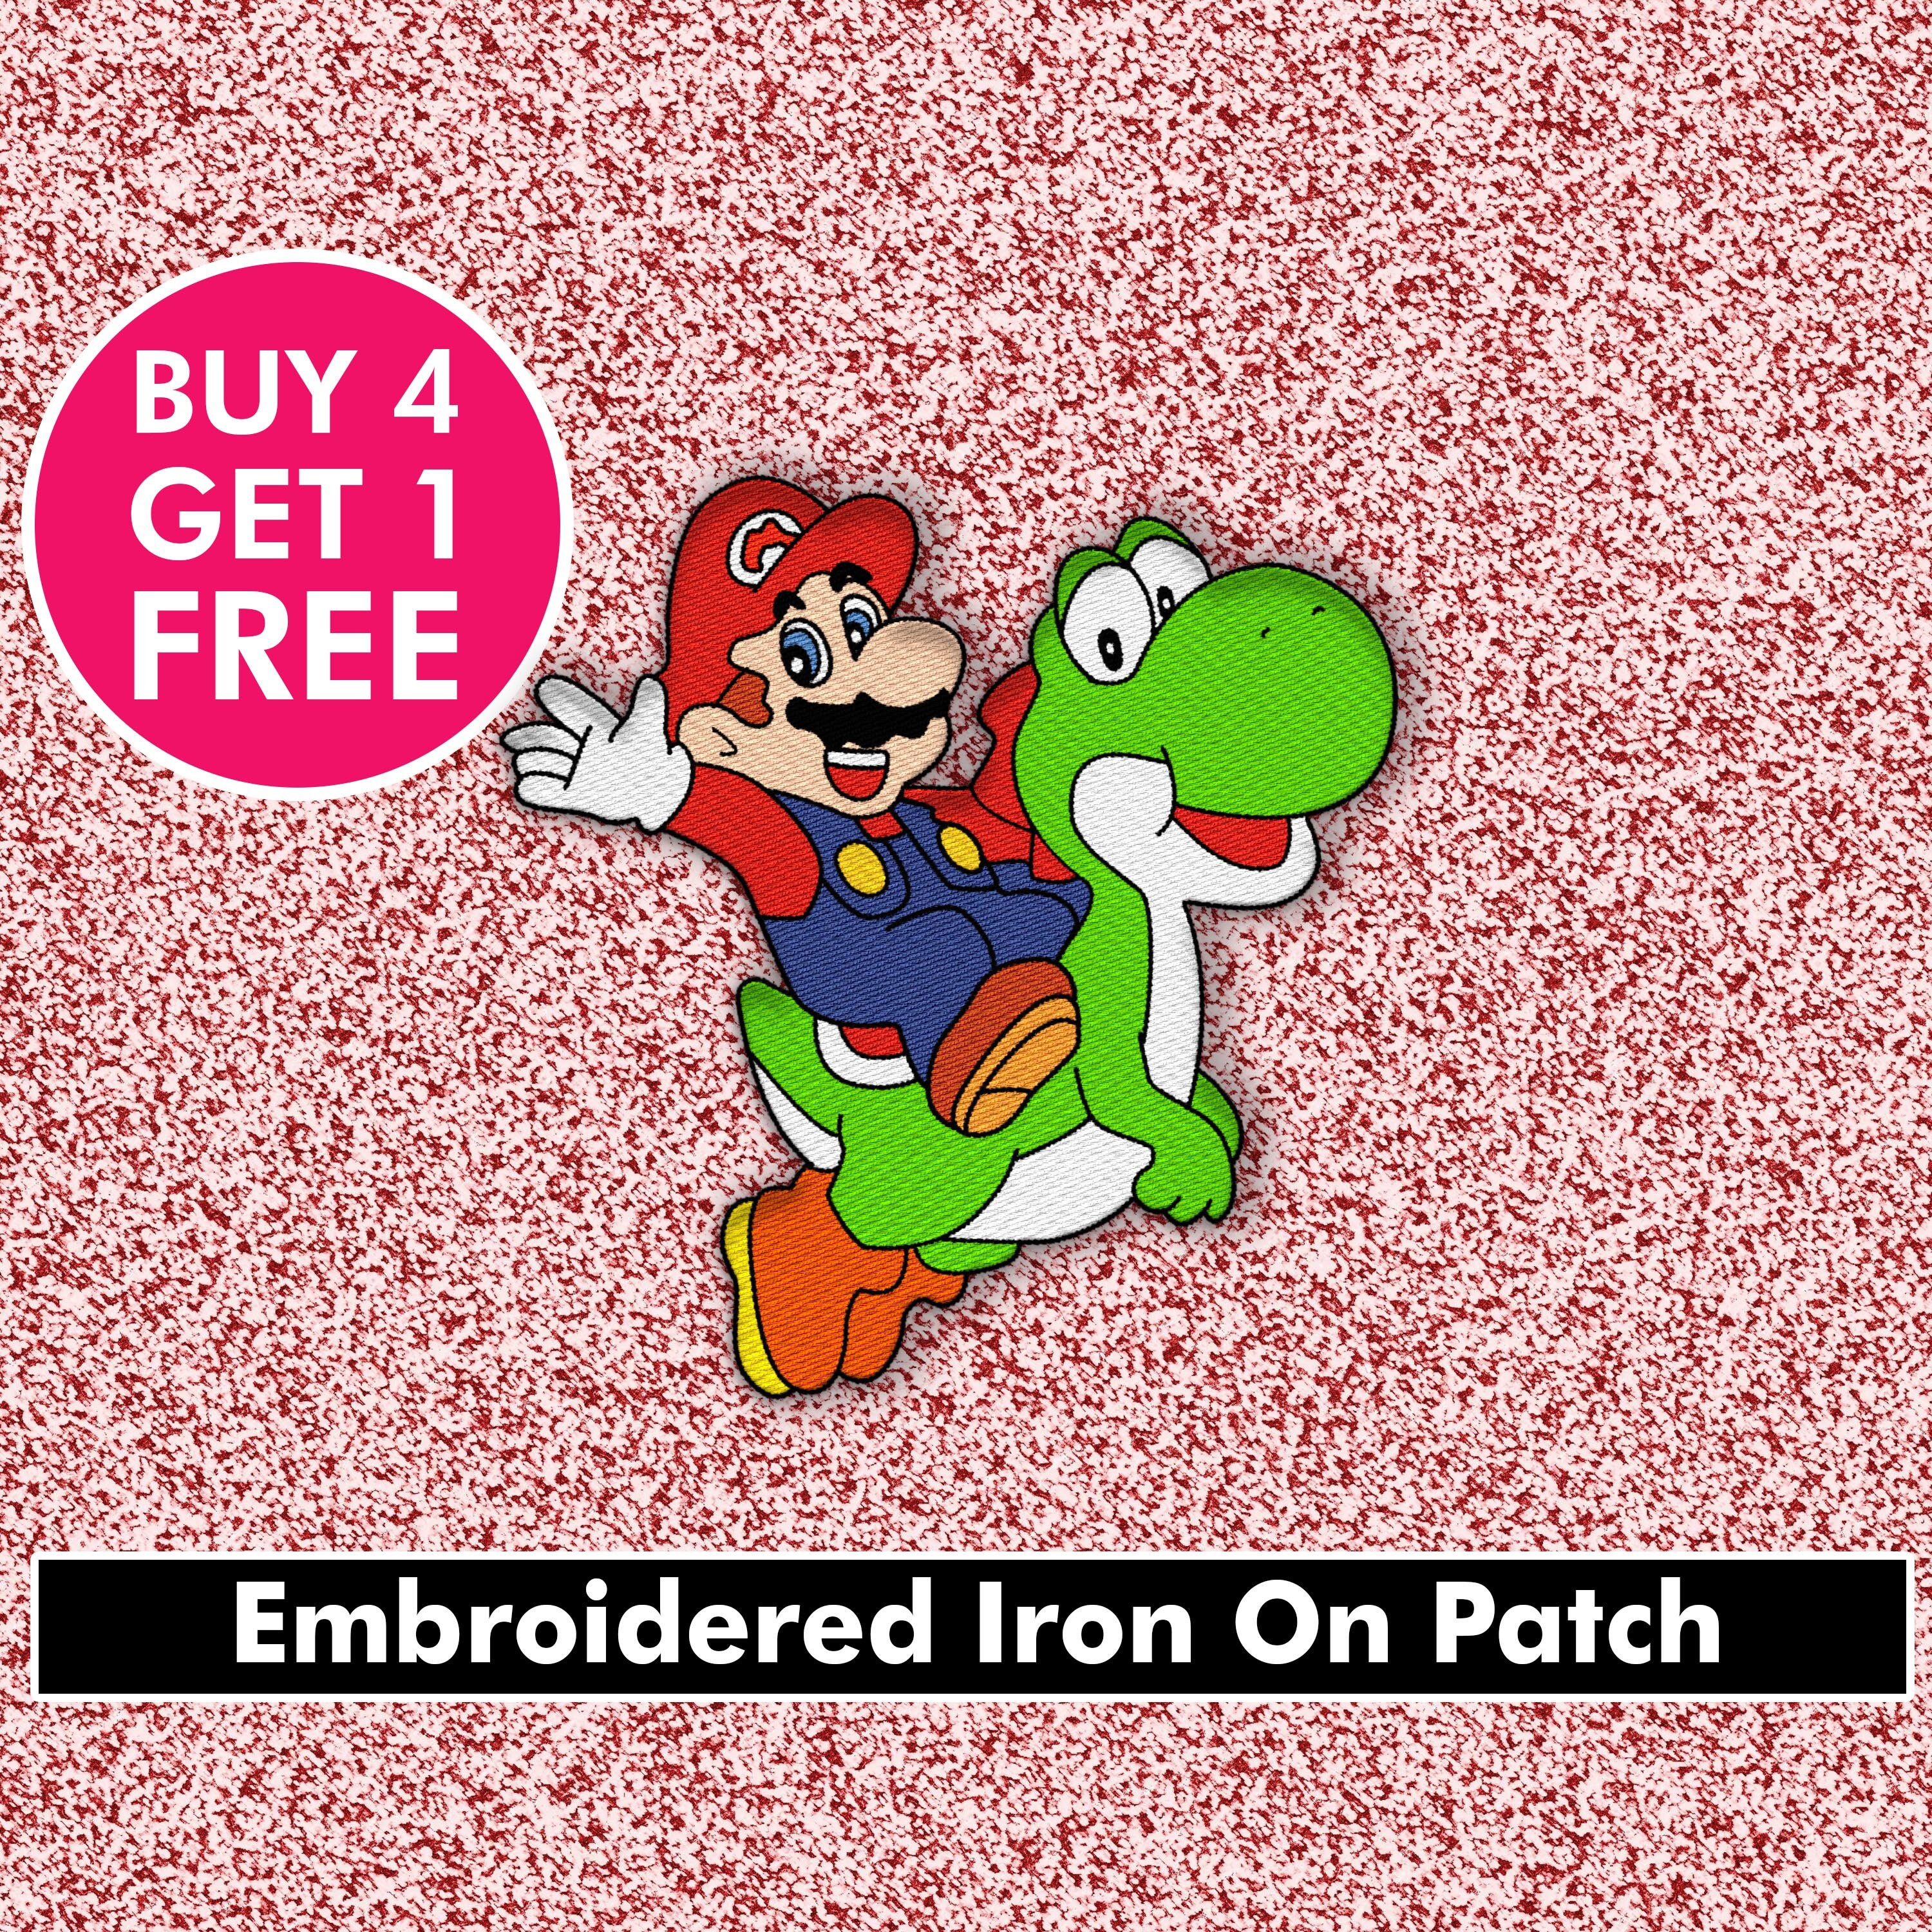 Mario Kart Inspired Iron on Patch, Super Mario Inspired Iron on Patch, Mario  and Yoshi Iron on Patch 